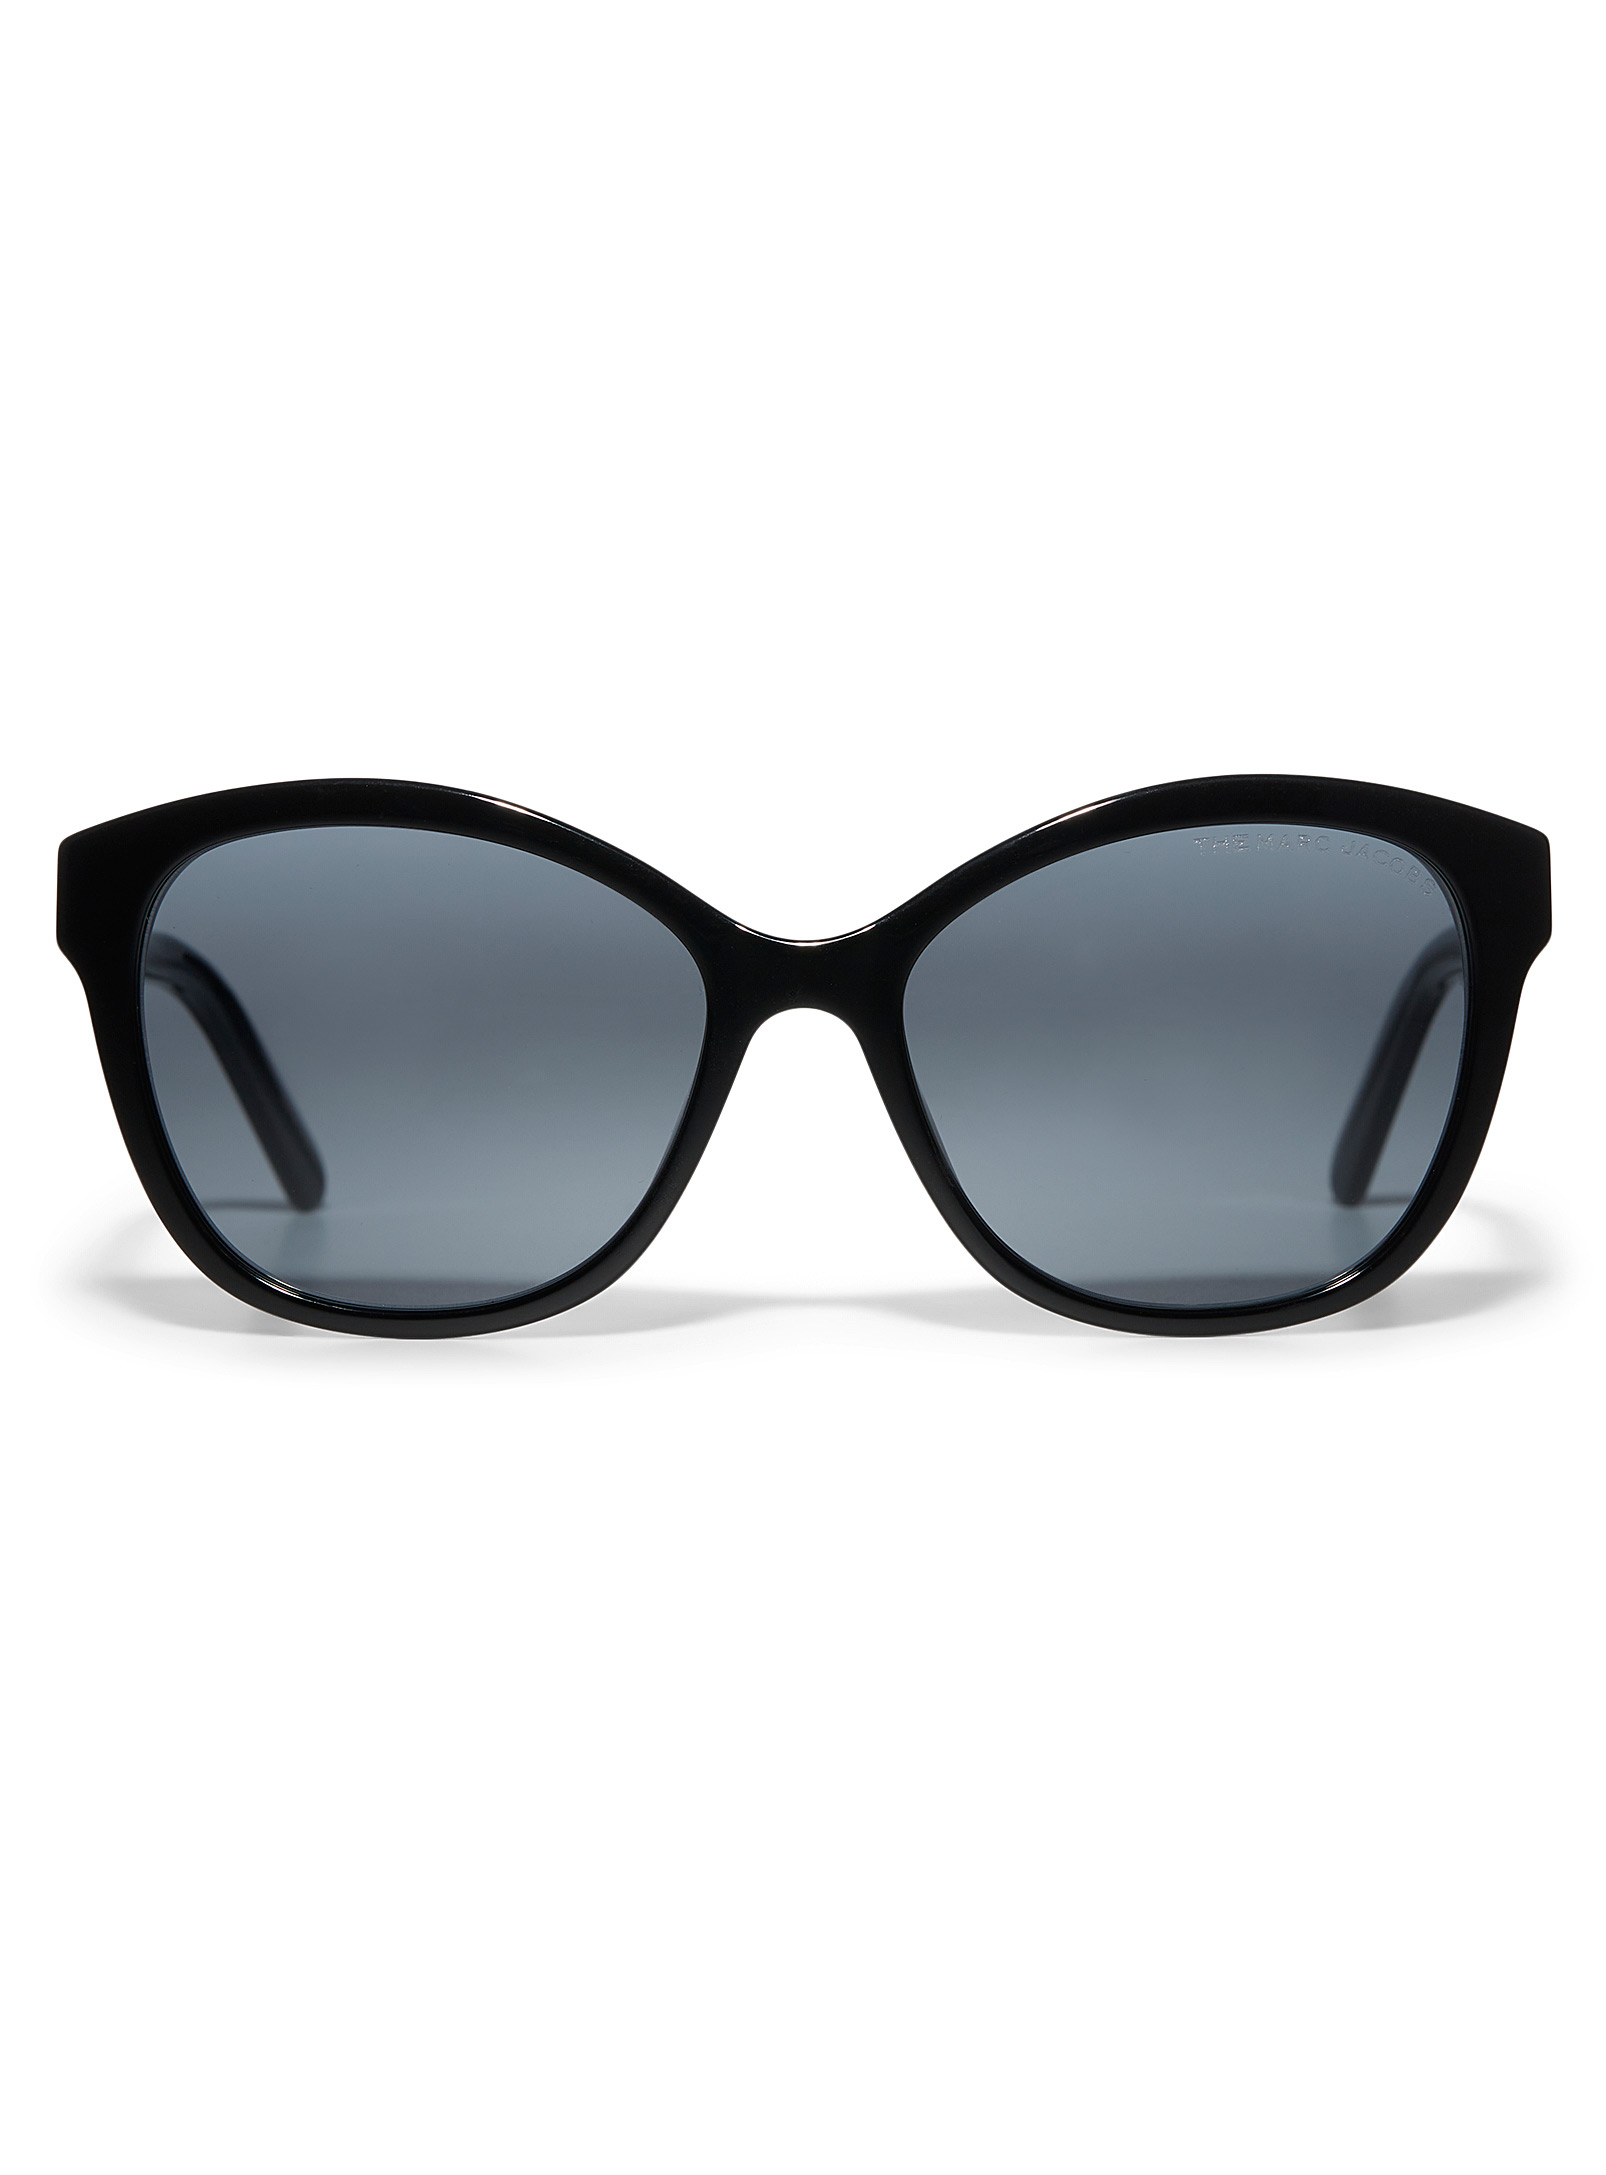 Marc Jacobs Round Tortoiseshell Sunglasses In Black